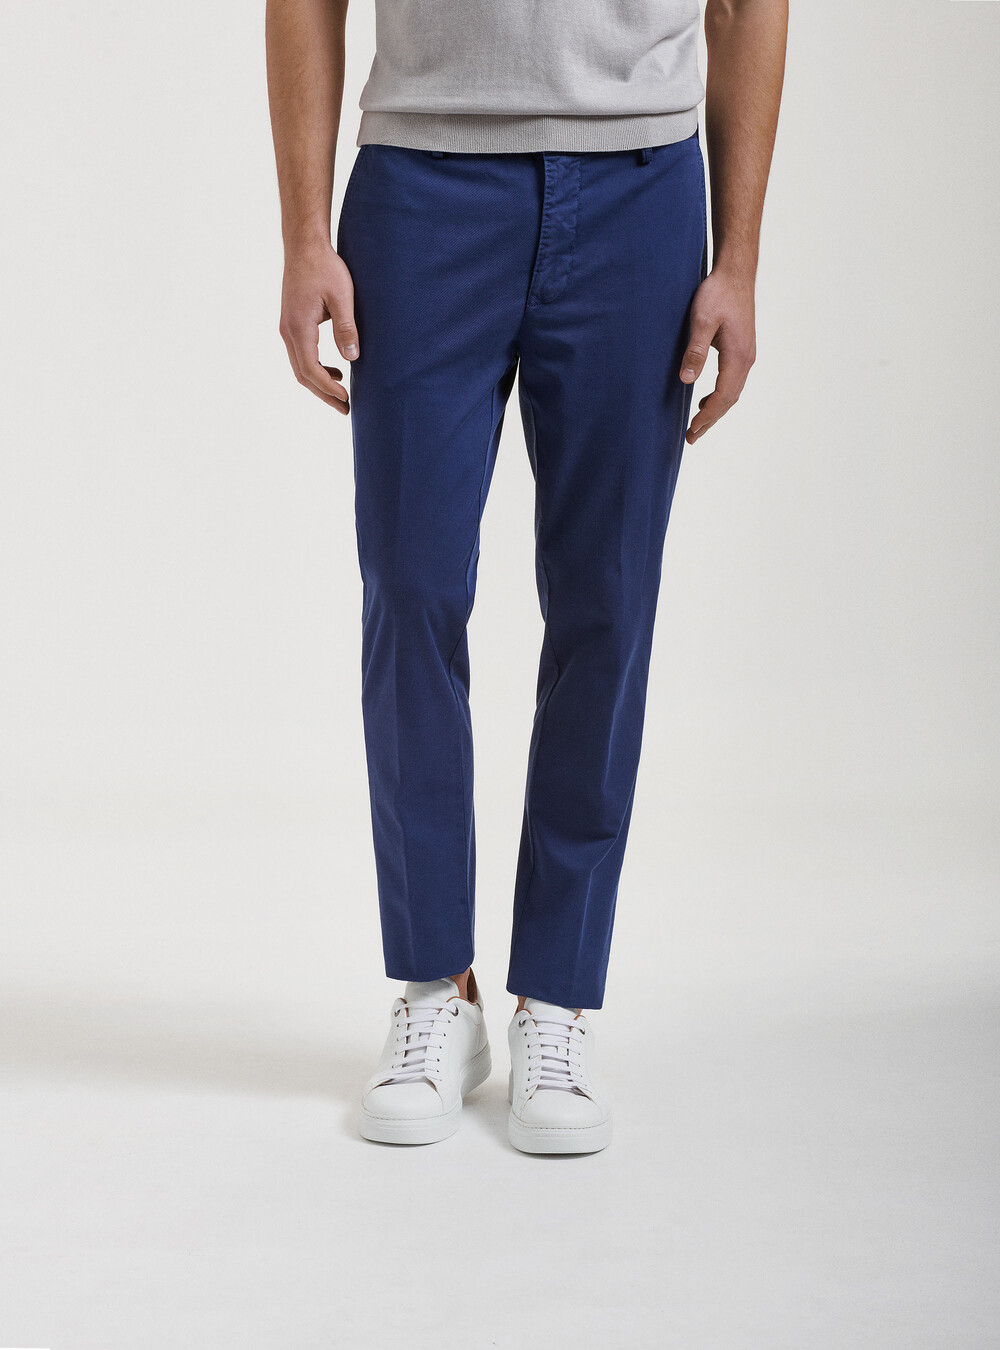 Garment-dyed stretch twill chino trousers, GutteridgeUS